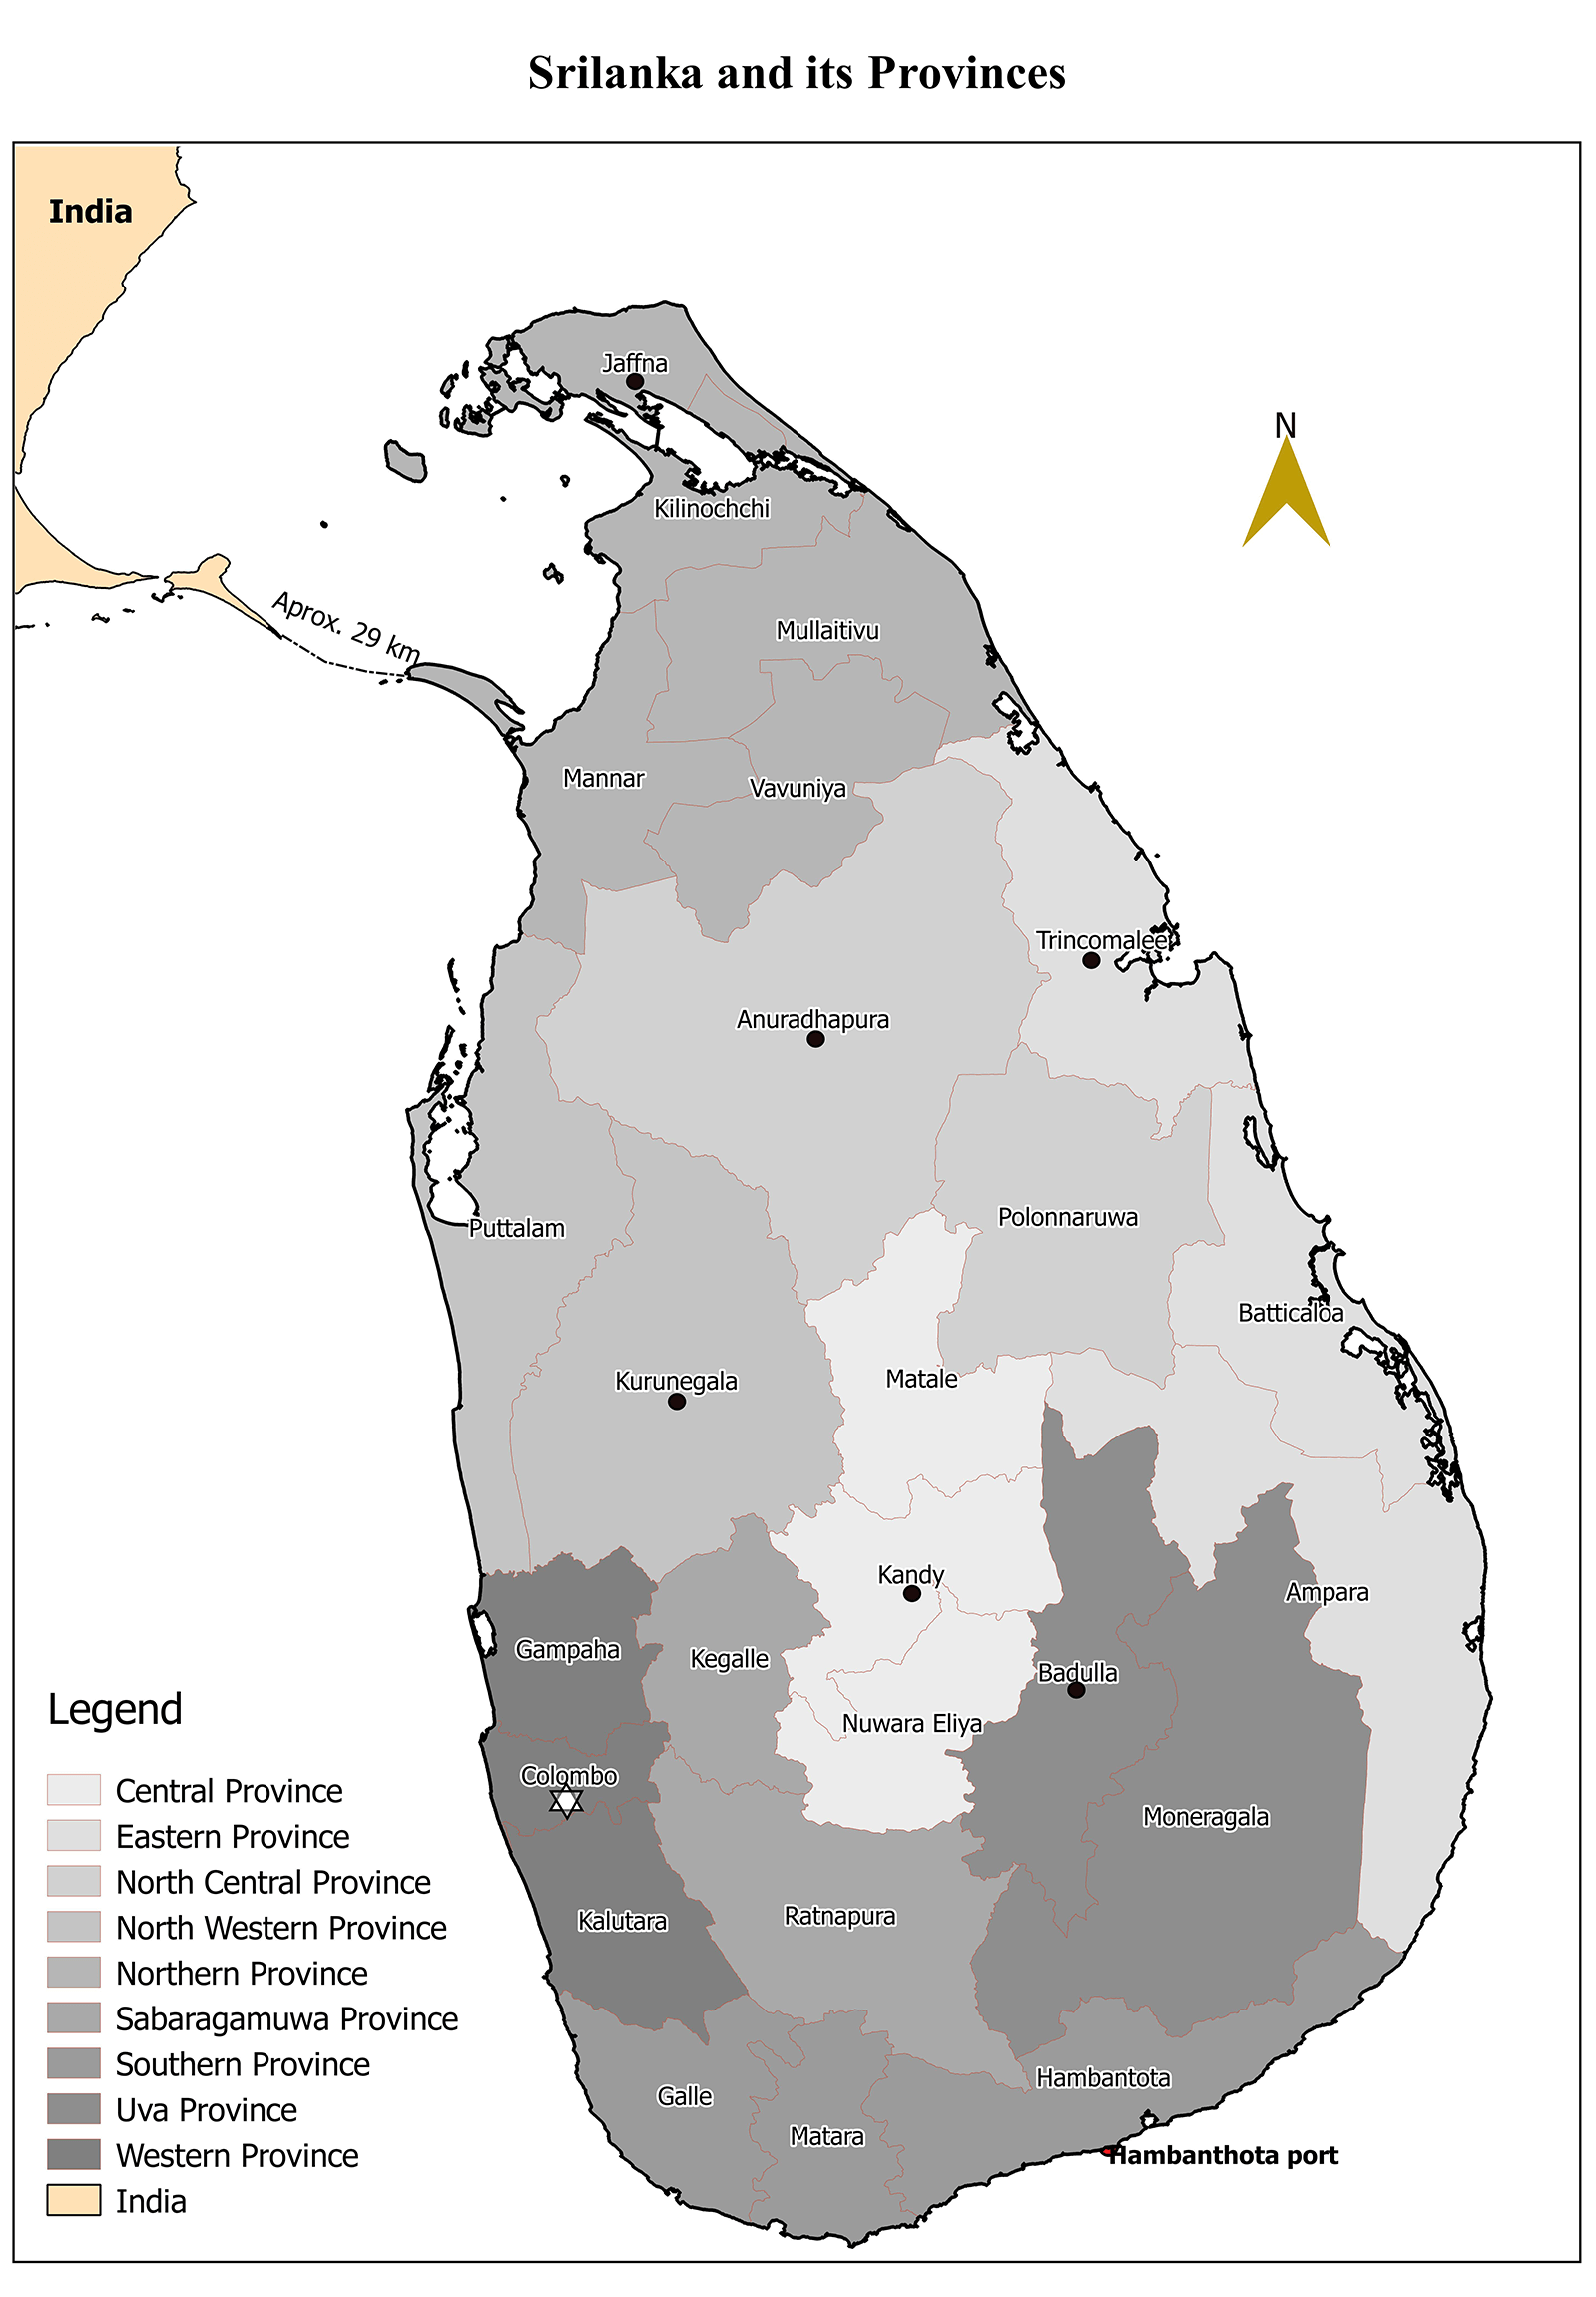 Srilanka and its Provinces